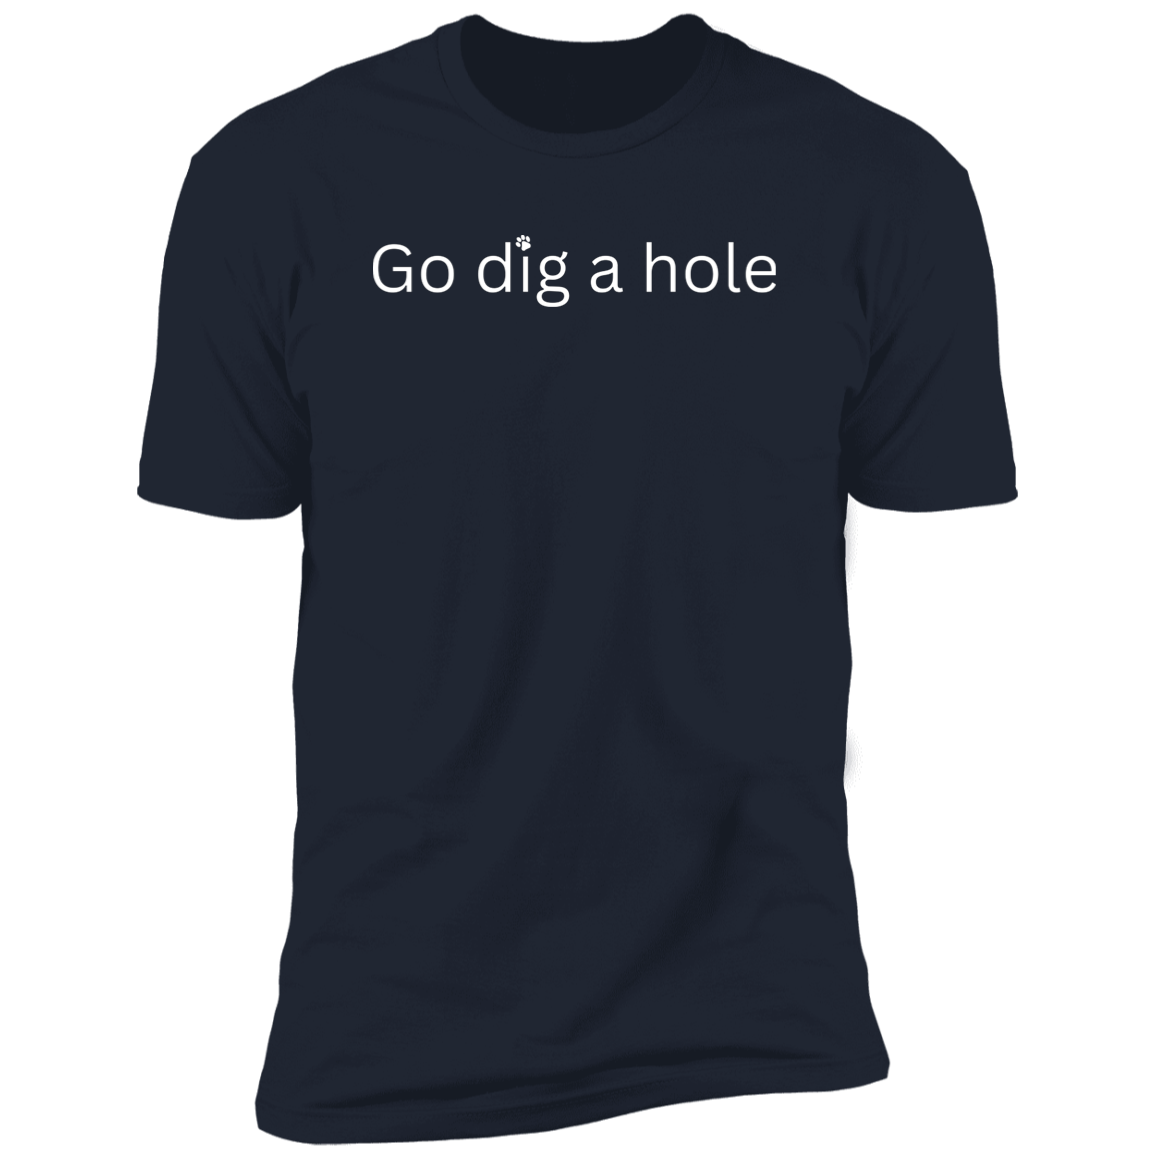 Go Dig a Hole Dog T-Shirt, Dog shirt for humans, funny dog shirt, funny t-shirt, in navy blue